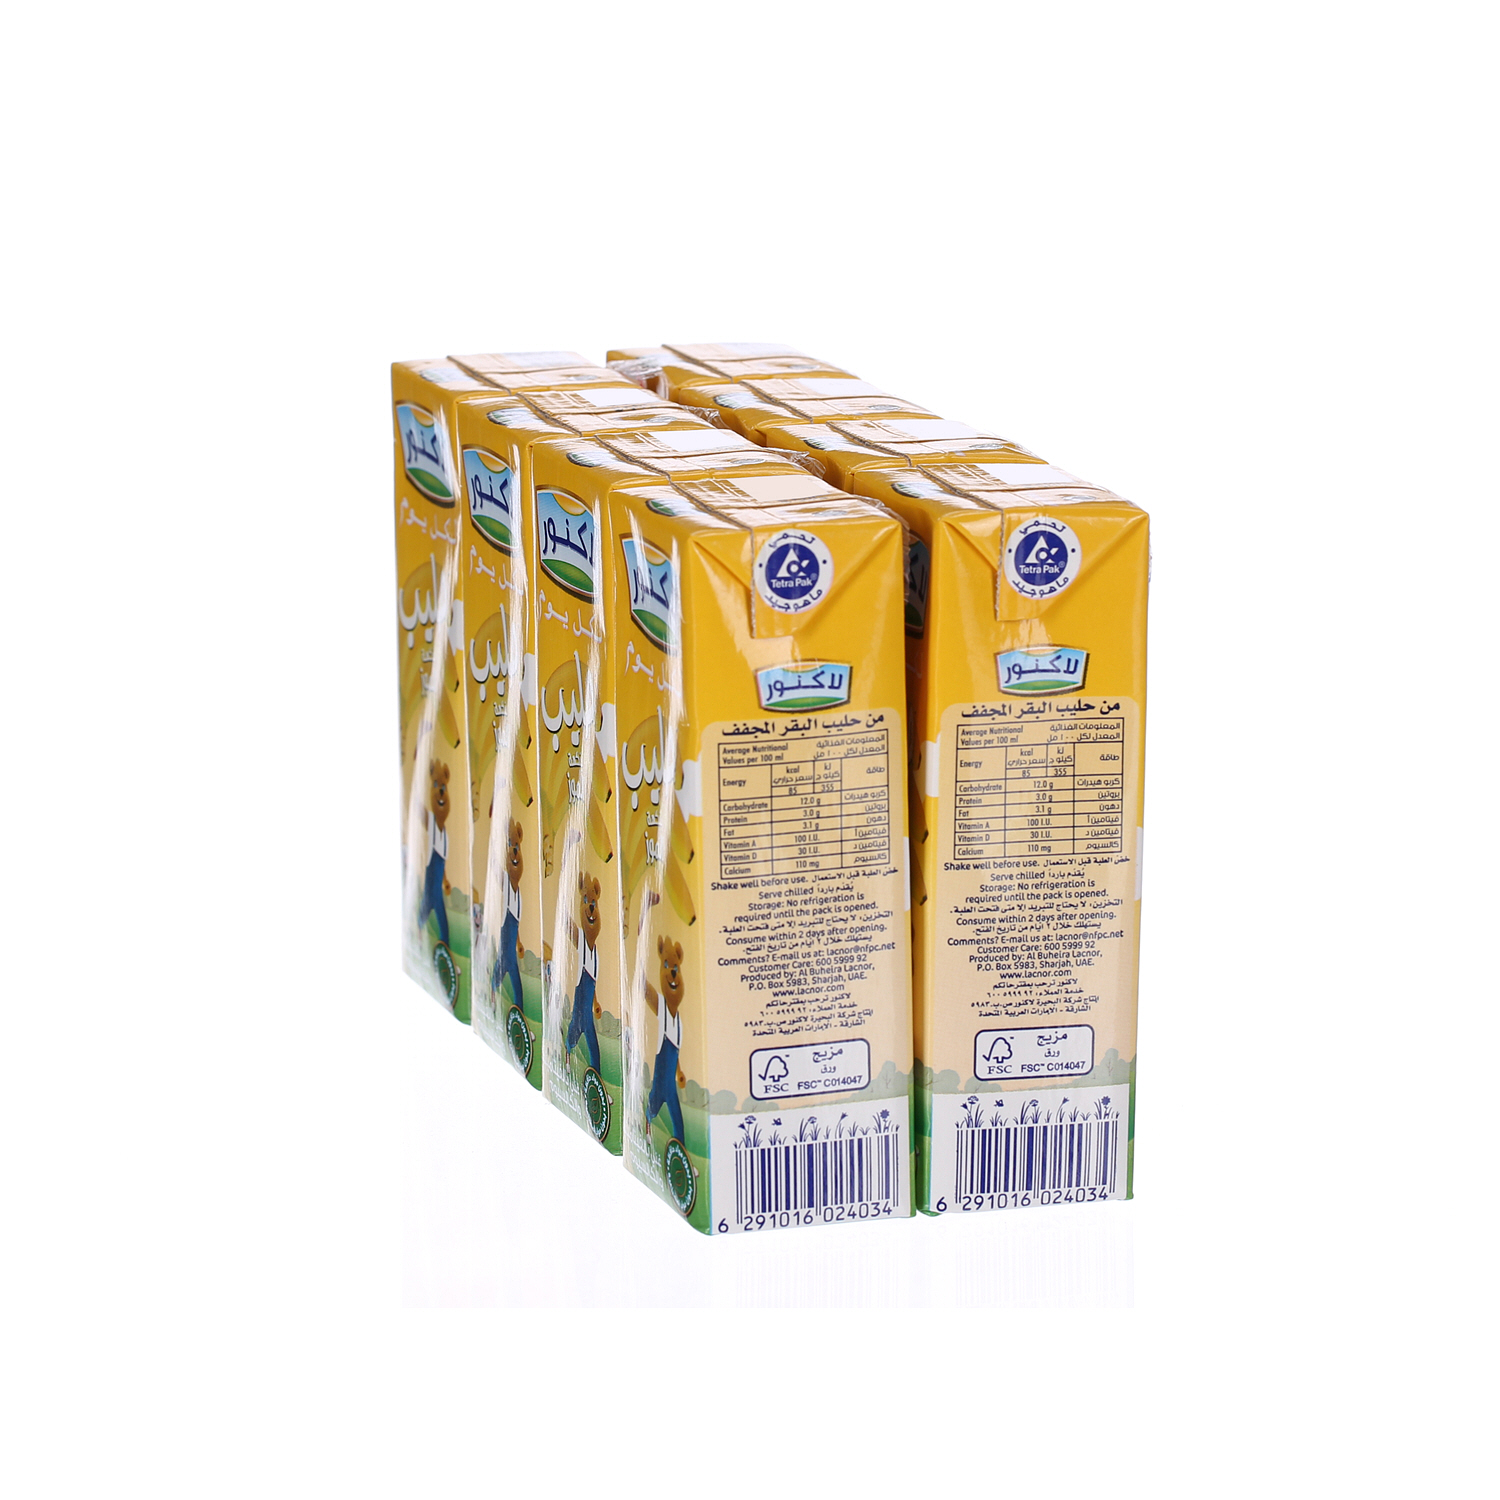 Lacnor Banana Milk 180 ml × 8 Pack